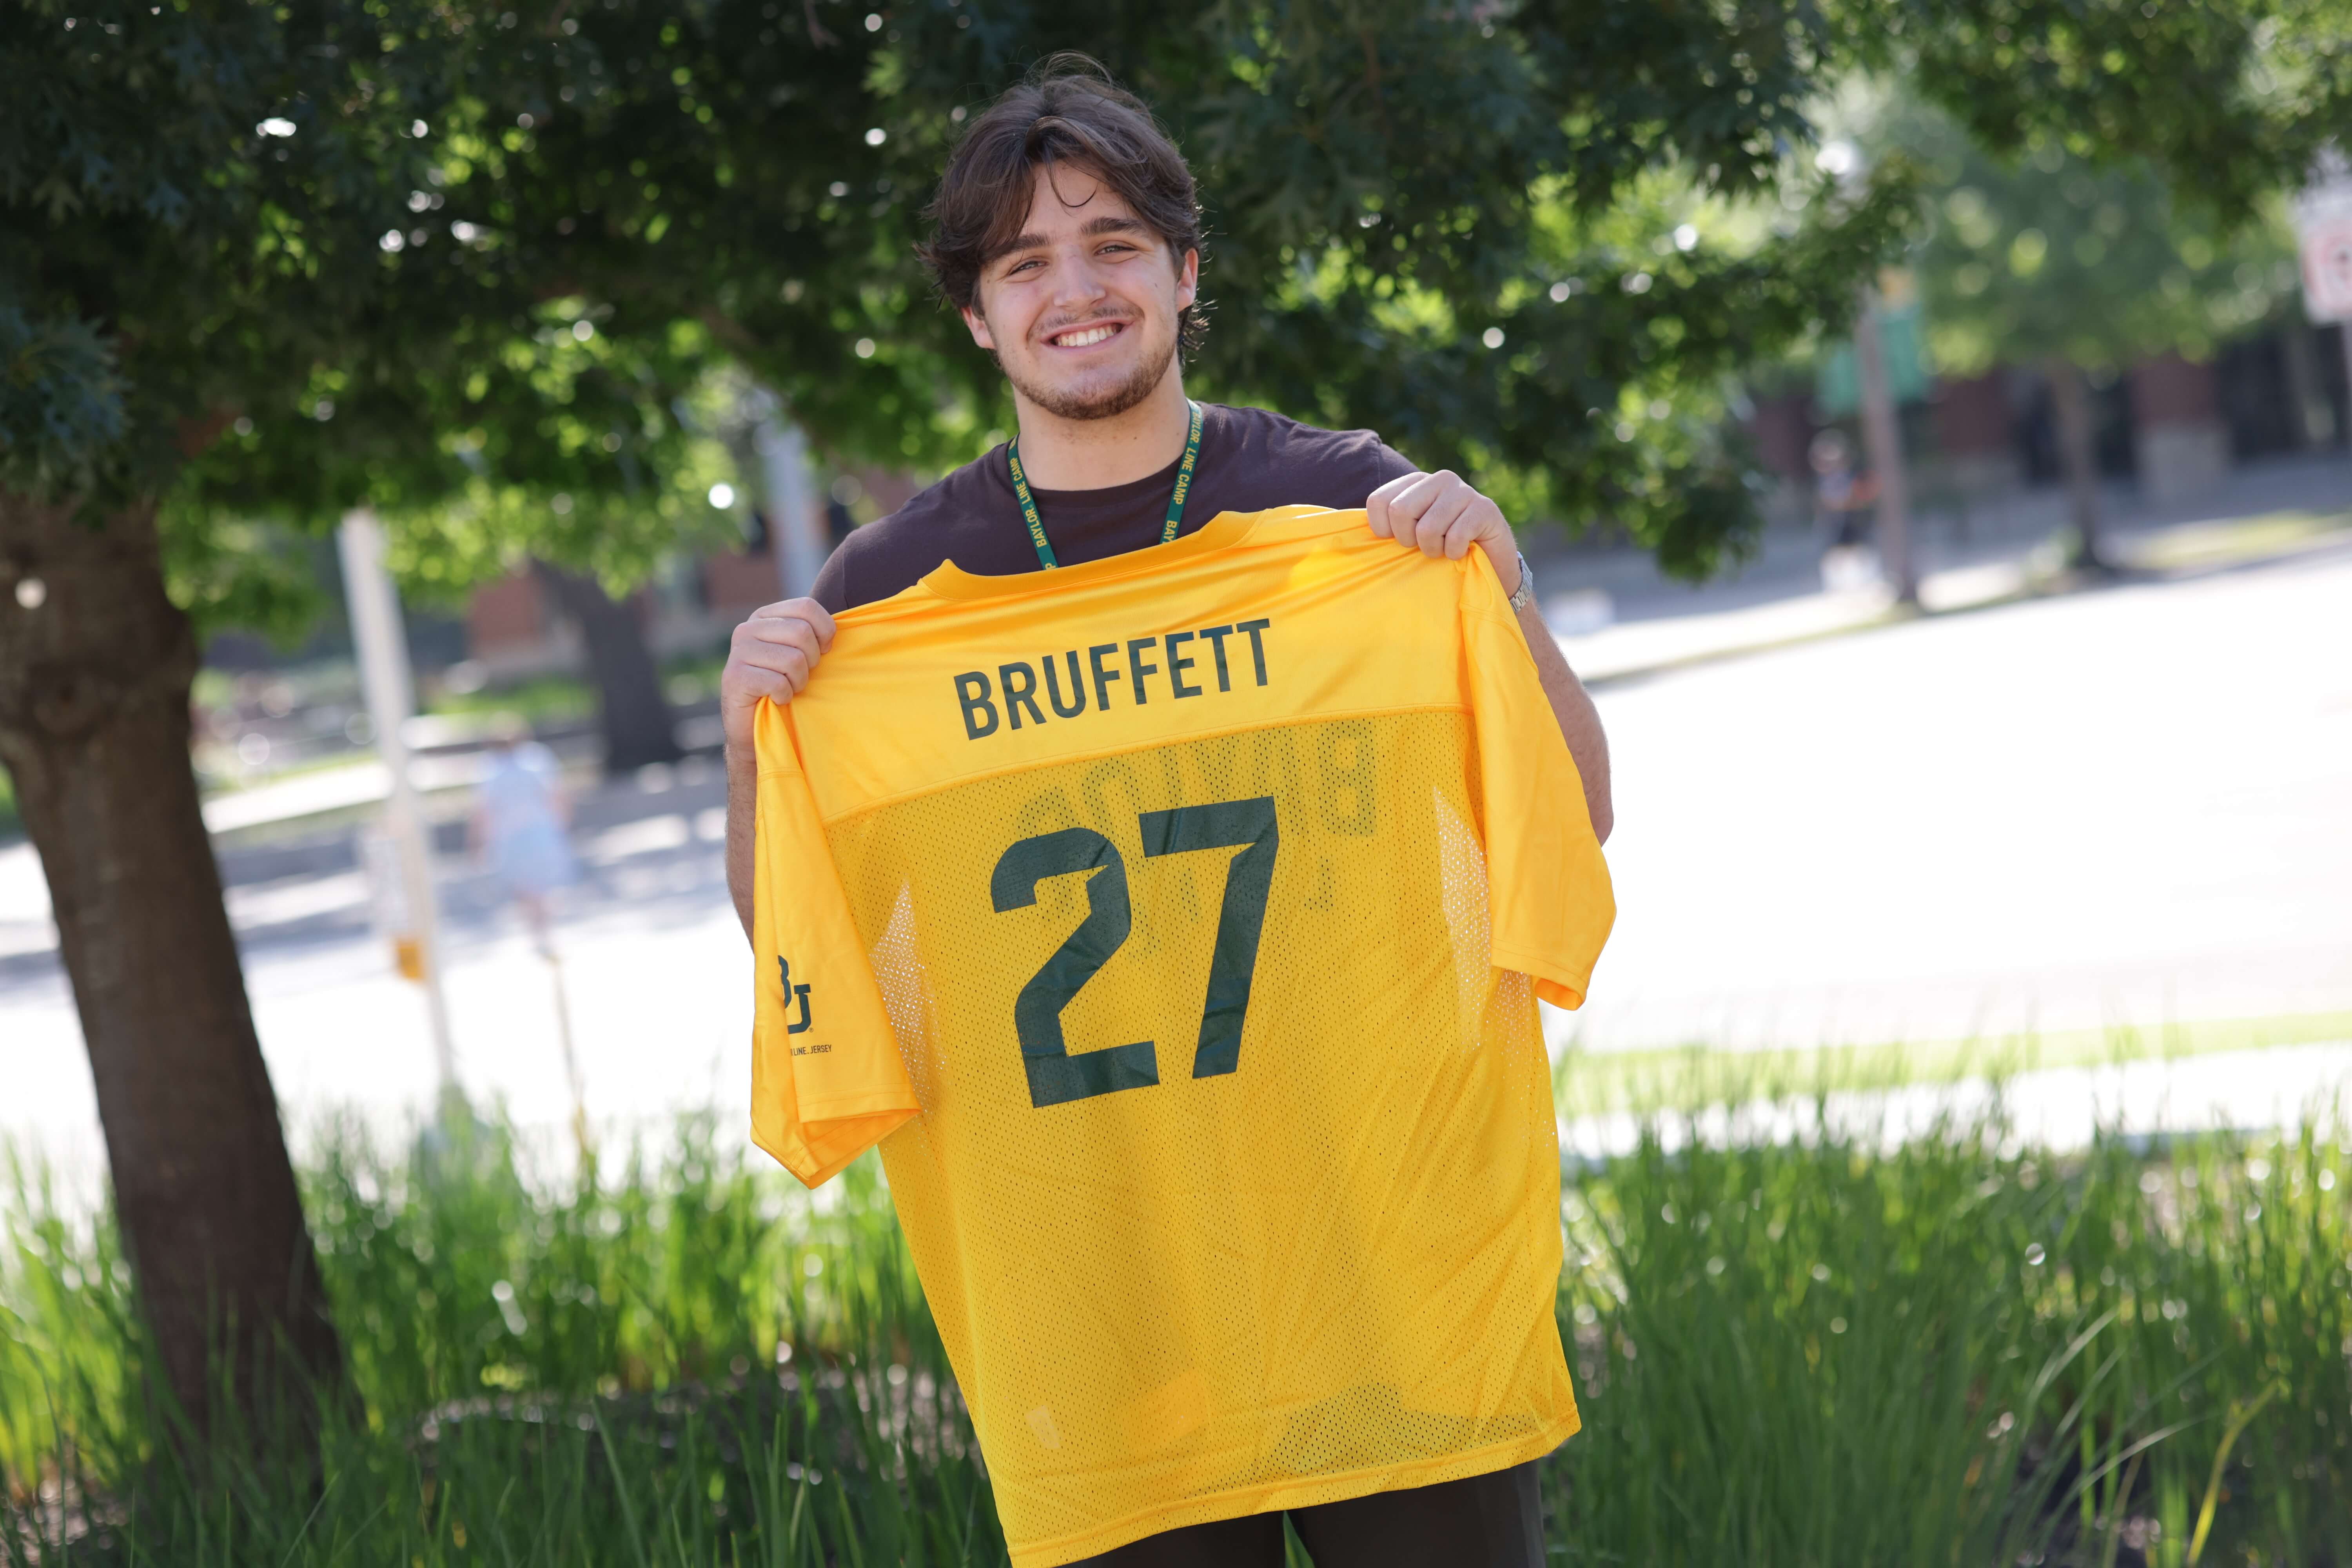 Bruffet holding Baylor line jersey 